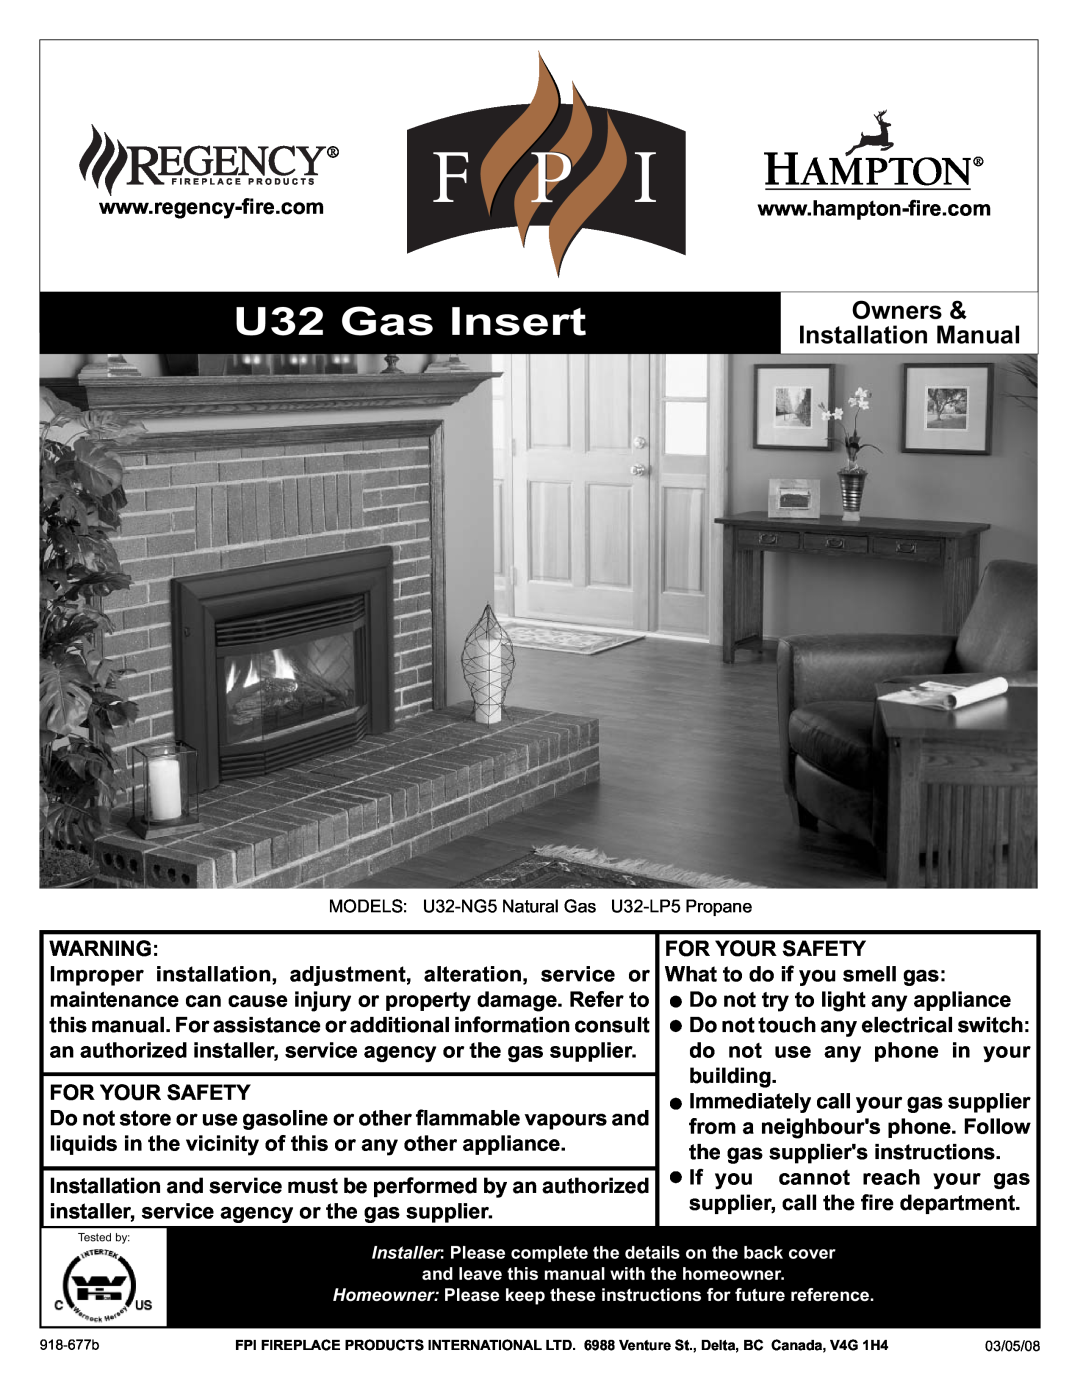 Hampton Direct installation manual U32 Gas Insert, Owners, Installation Manual 